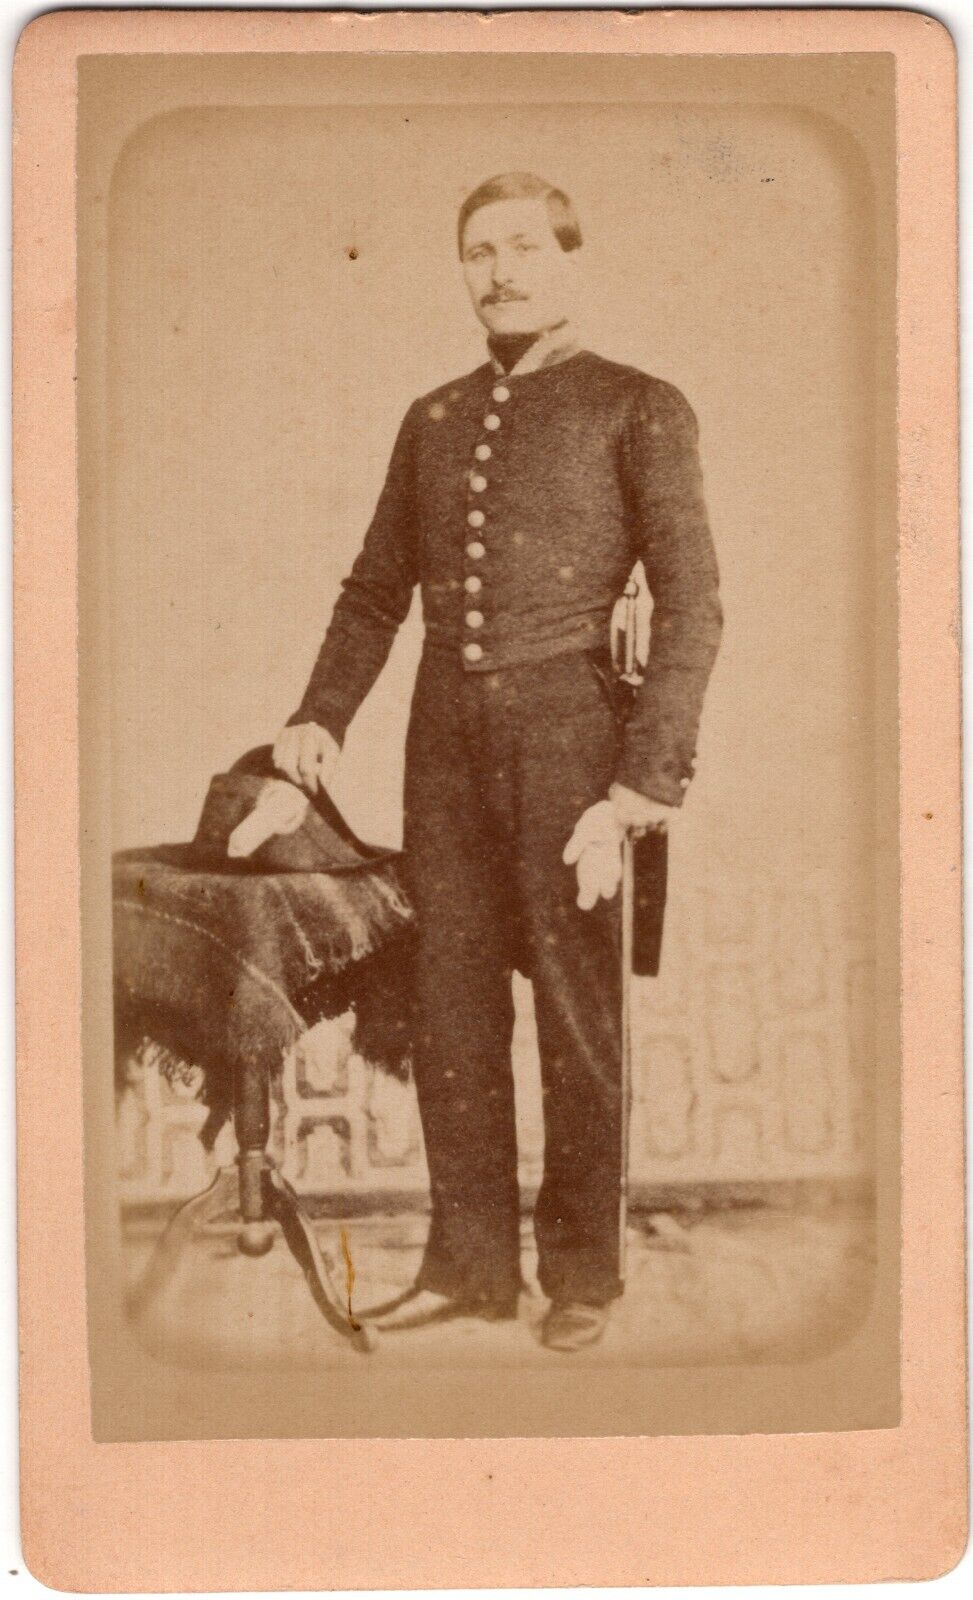 CIRCA 1880s CDV LYONNAISE FRENCH CALVALRY SOLDIER IN UNIFORM SWORD BAUDY FRANCE